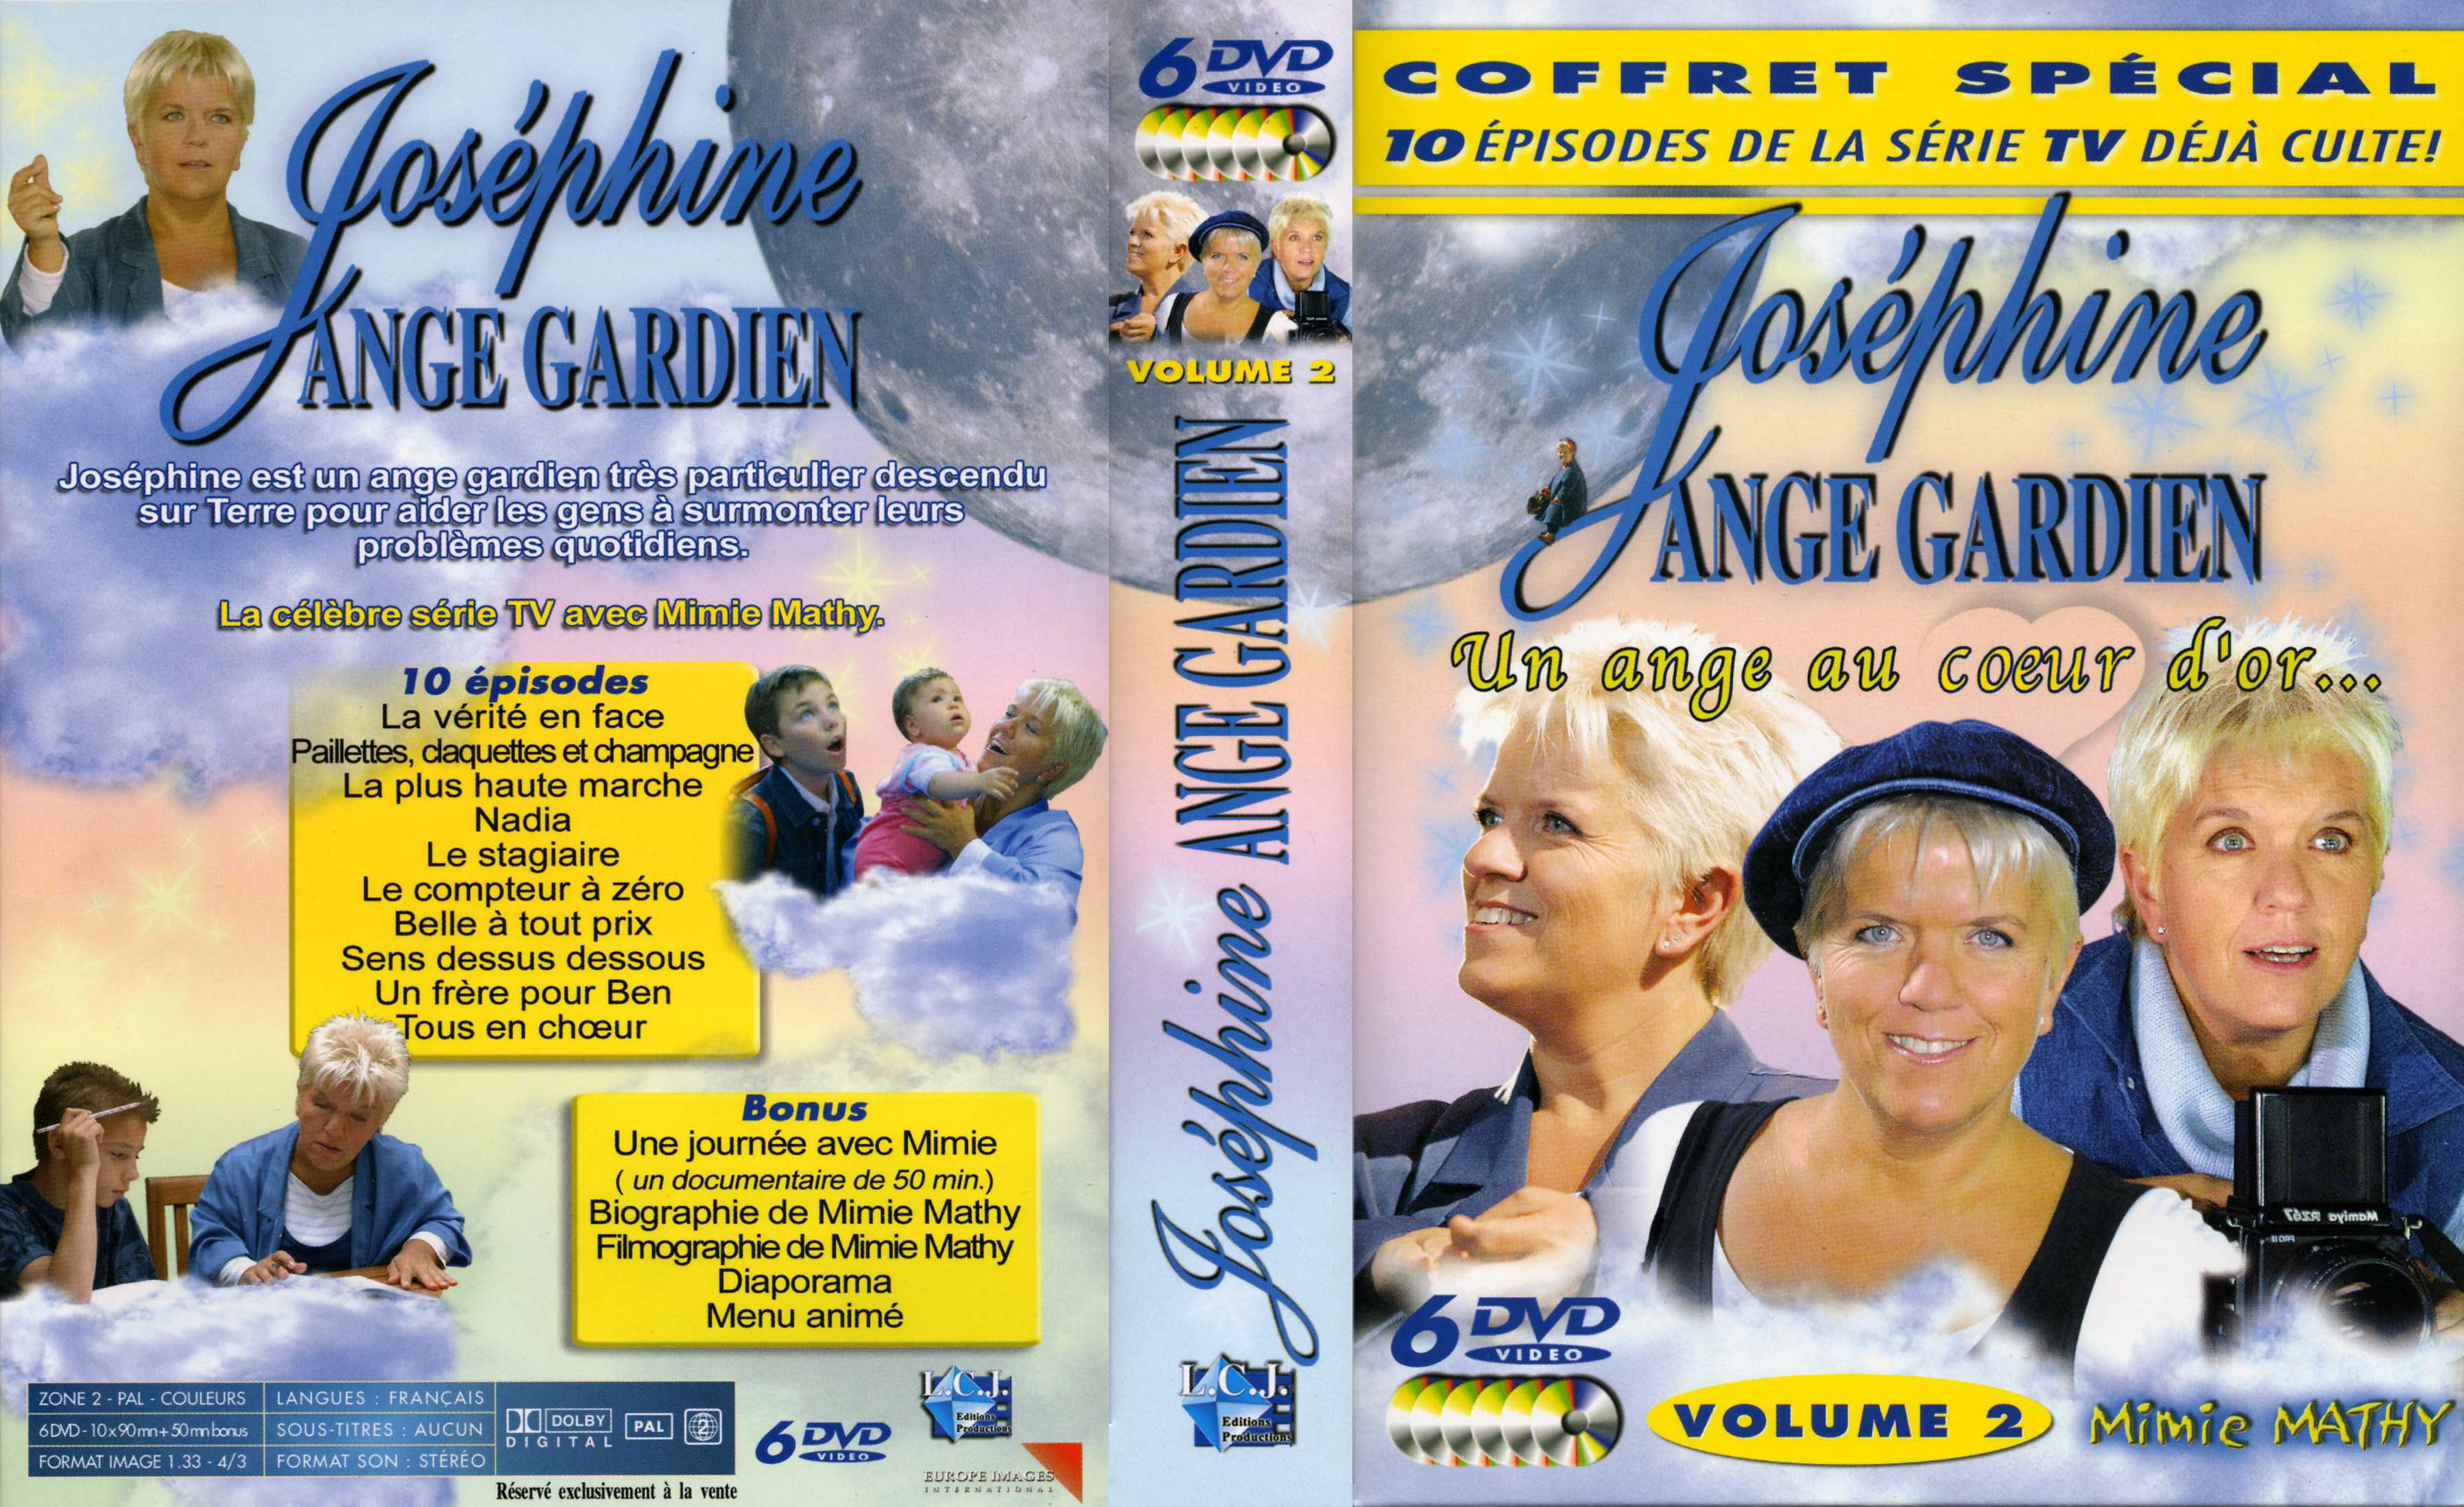 Jaquette DVD Josphine ange gardien COFFRET vol 2